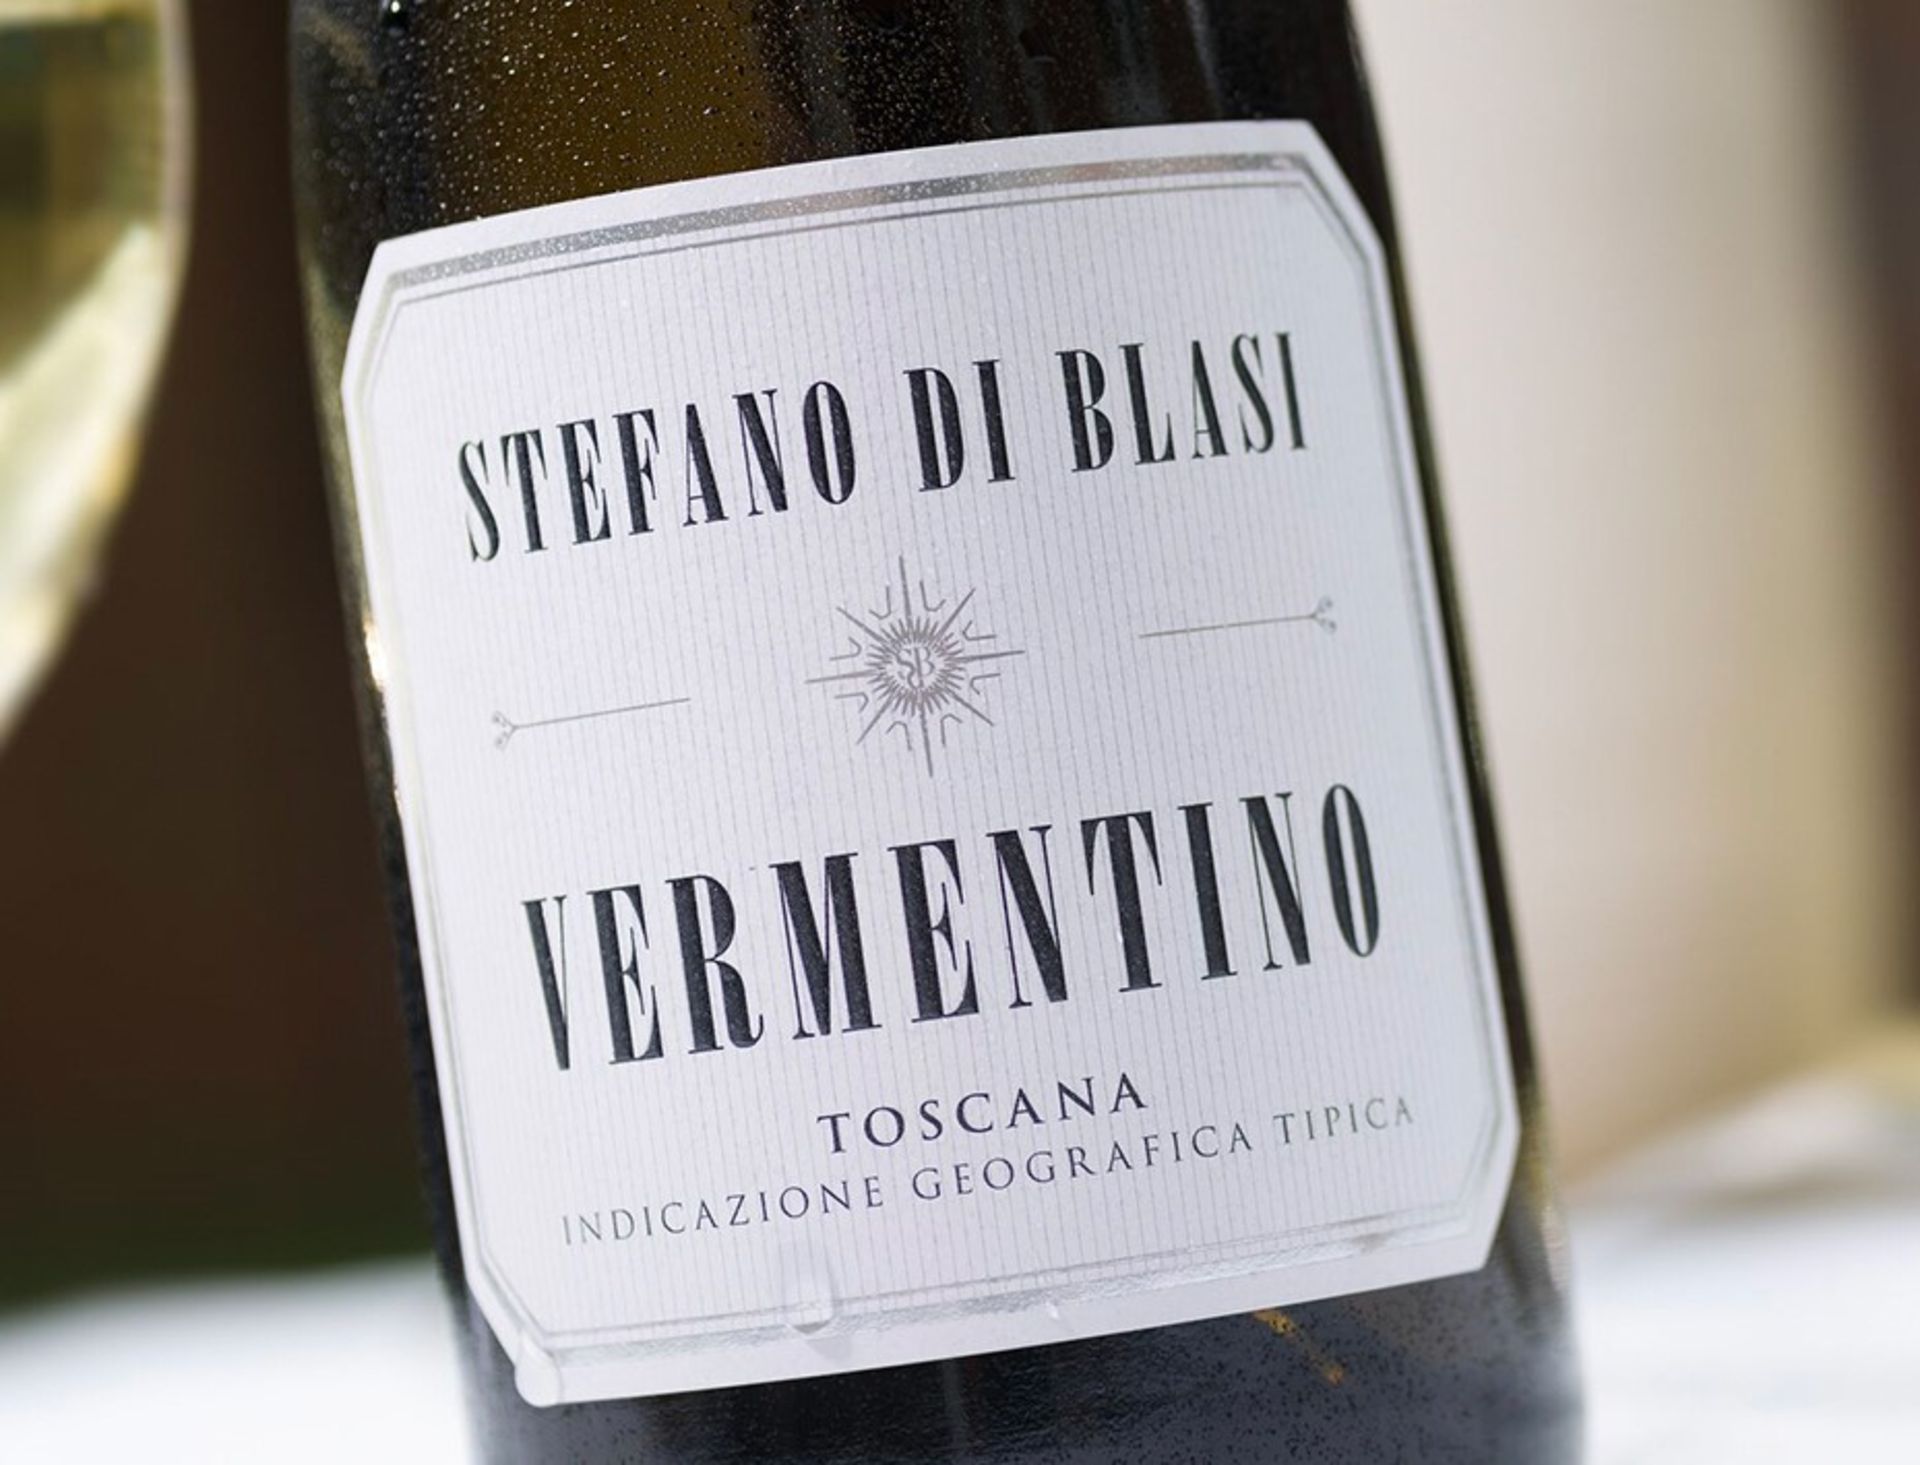 12 x Bottles of Stefano Di Blasi 2019 Vermentino Toscana 13.5% Wine - 750ml Bottles - Drink Until